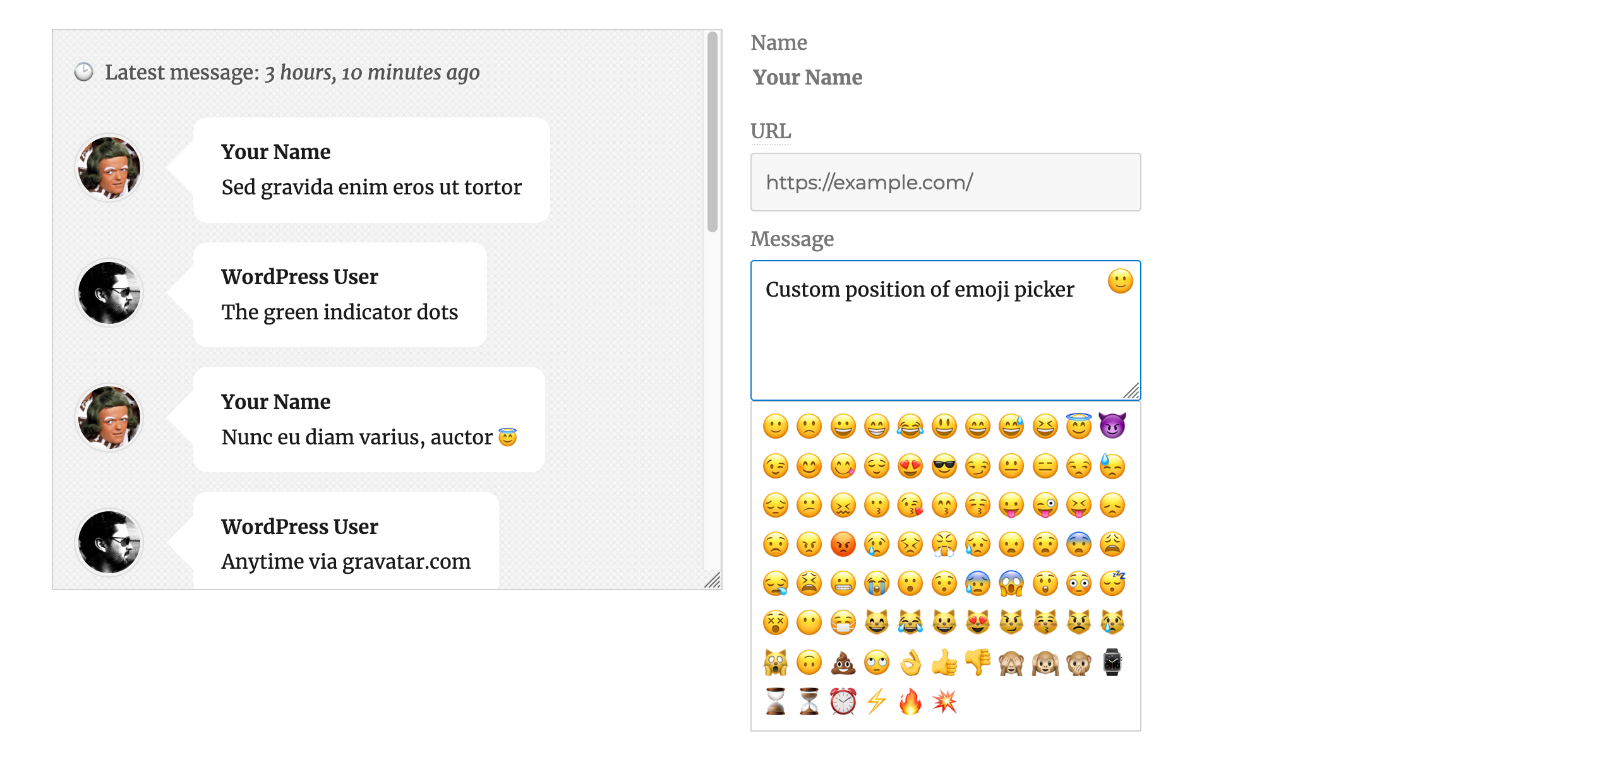 Screenshot showing custom position of emoji picker